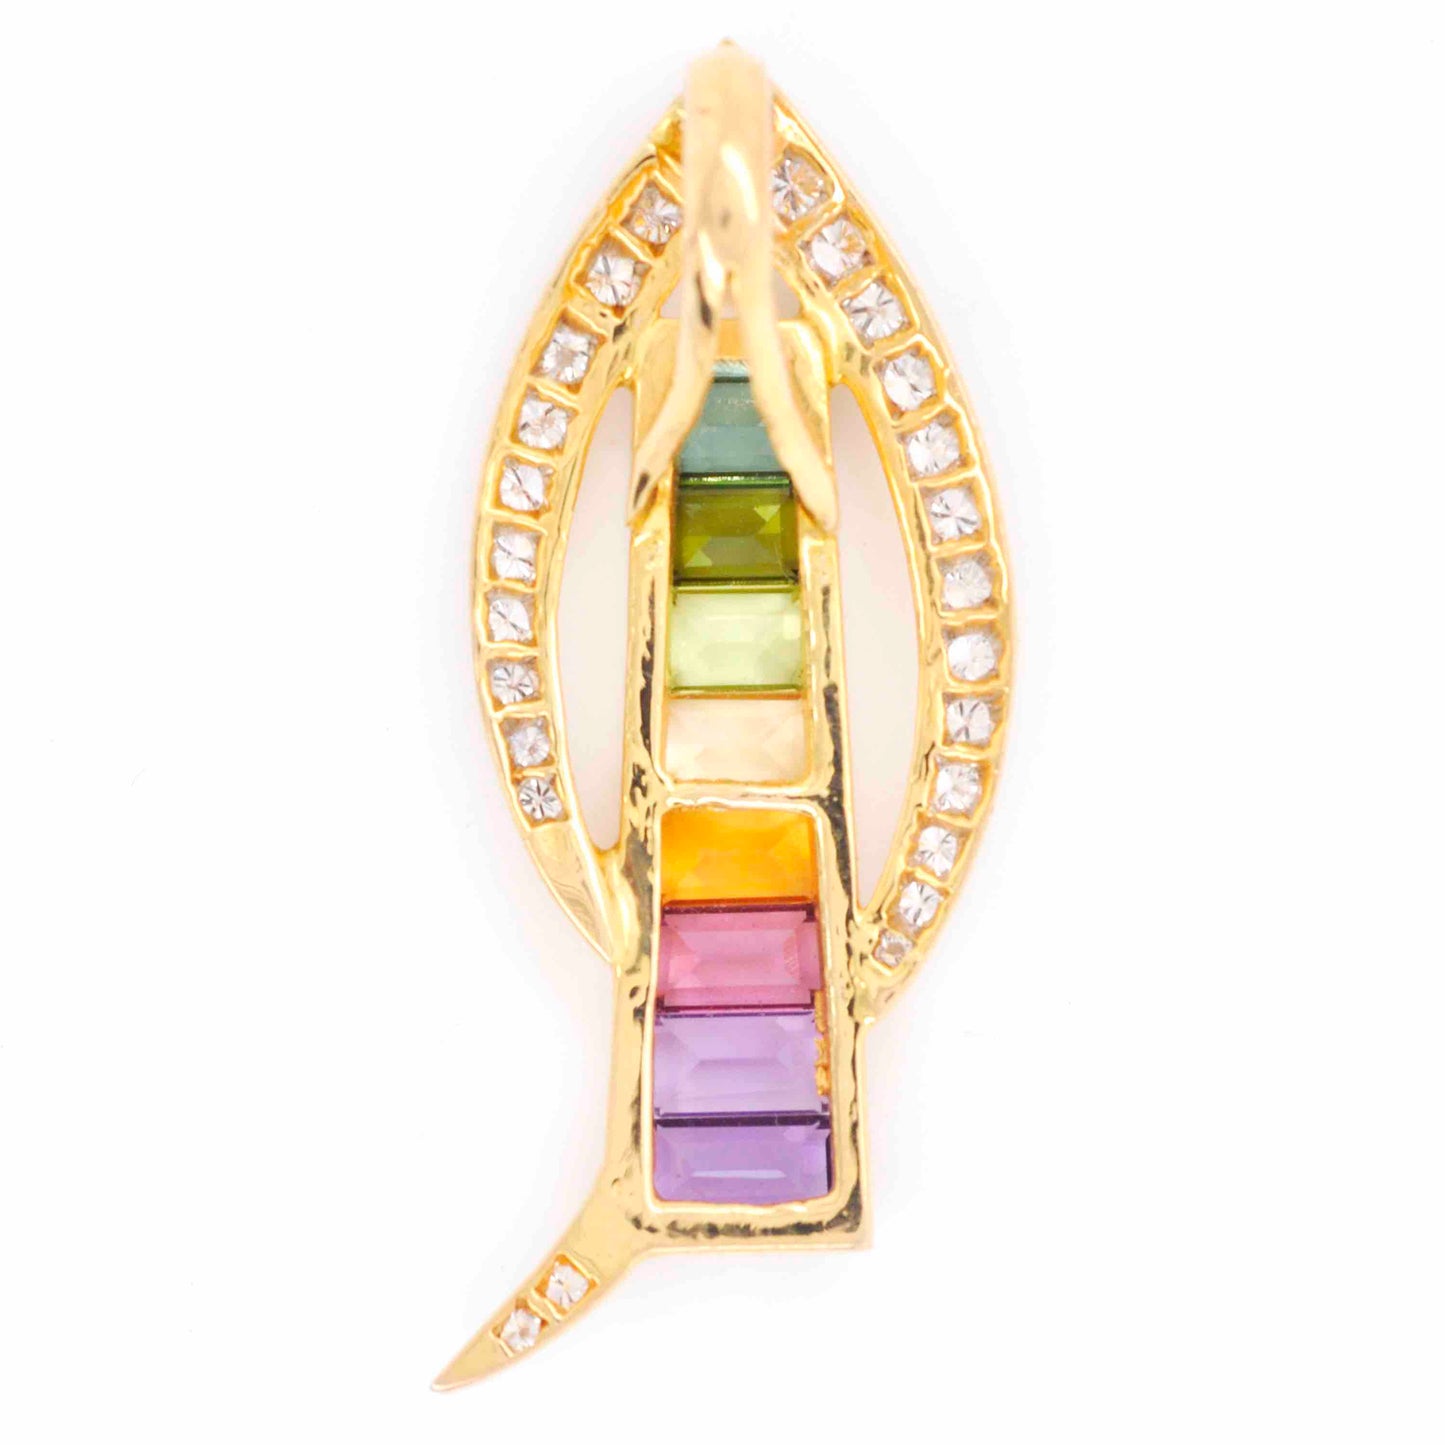 Rainbow gemstone diamond pendant necklace